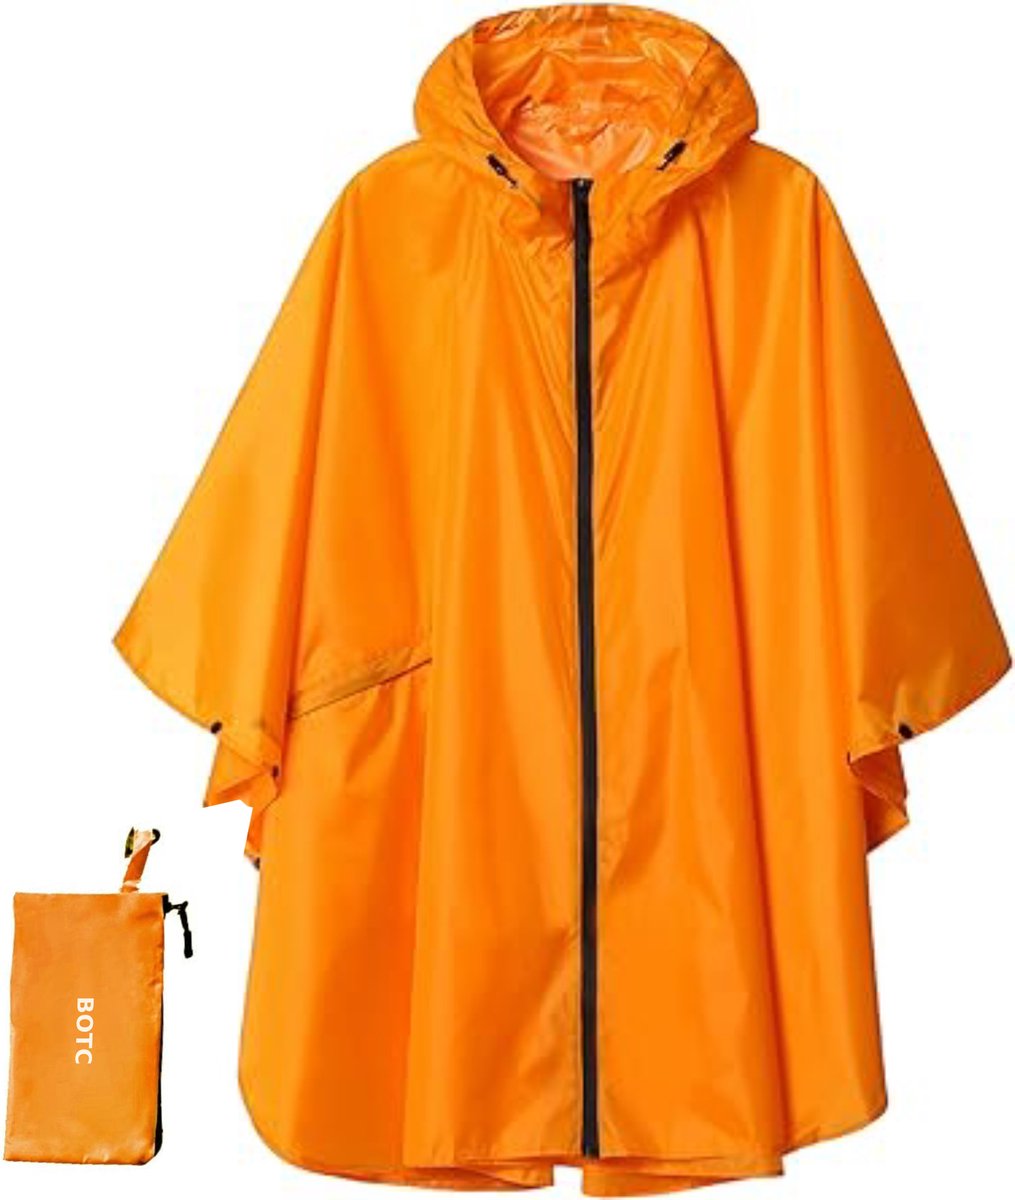 BOTC Poncho - Regenponcho Fiets Dames & Heren - Raincoat Heren - Fietsponcho Fiets - Unisex - Hood en Snap - Waterdicht - Oranje - BOTC